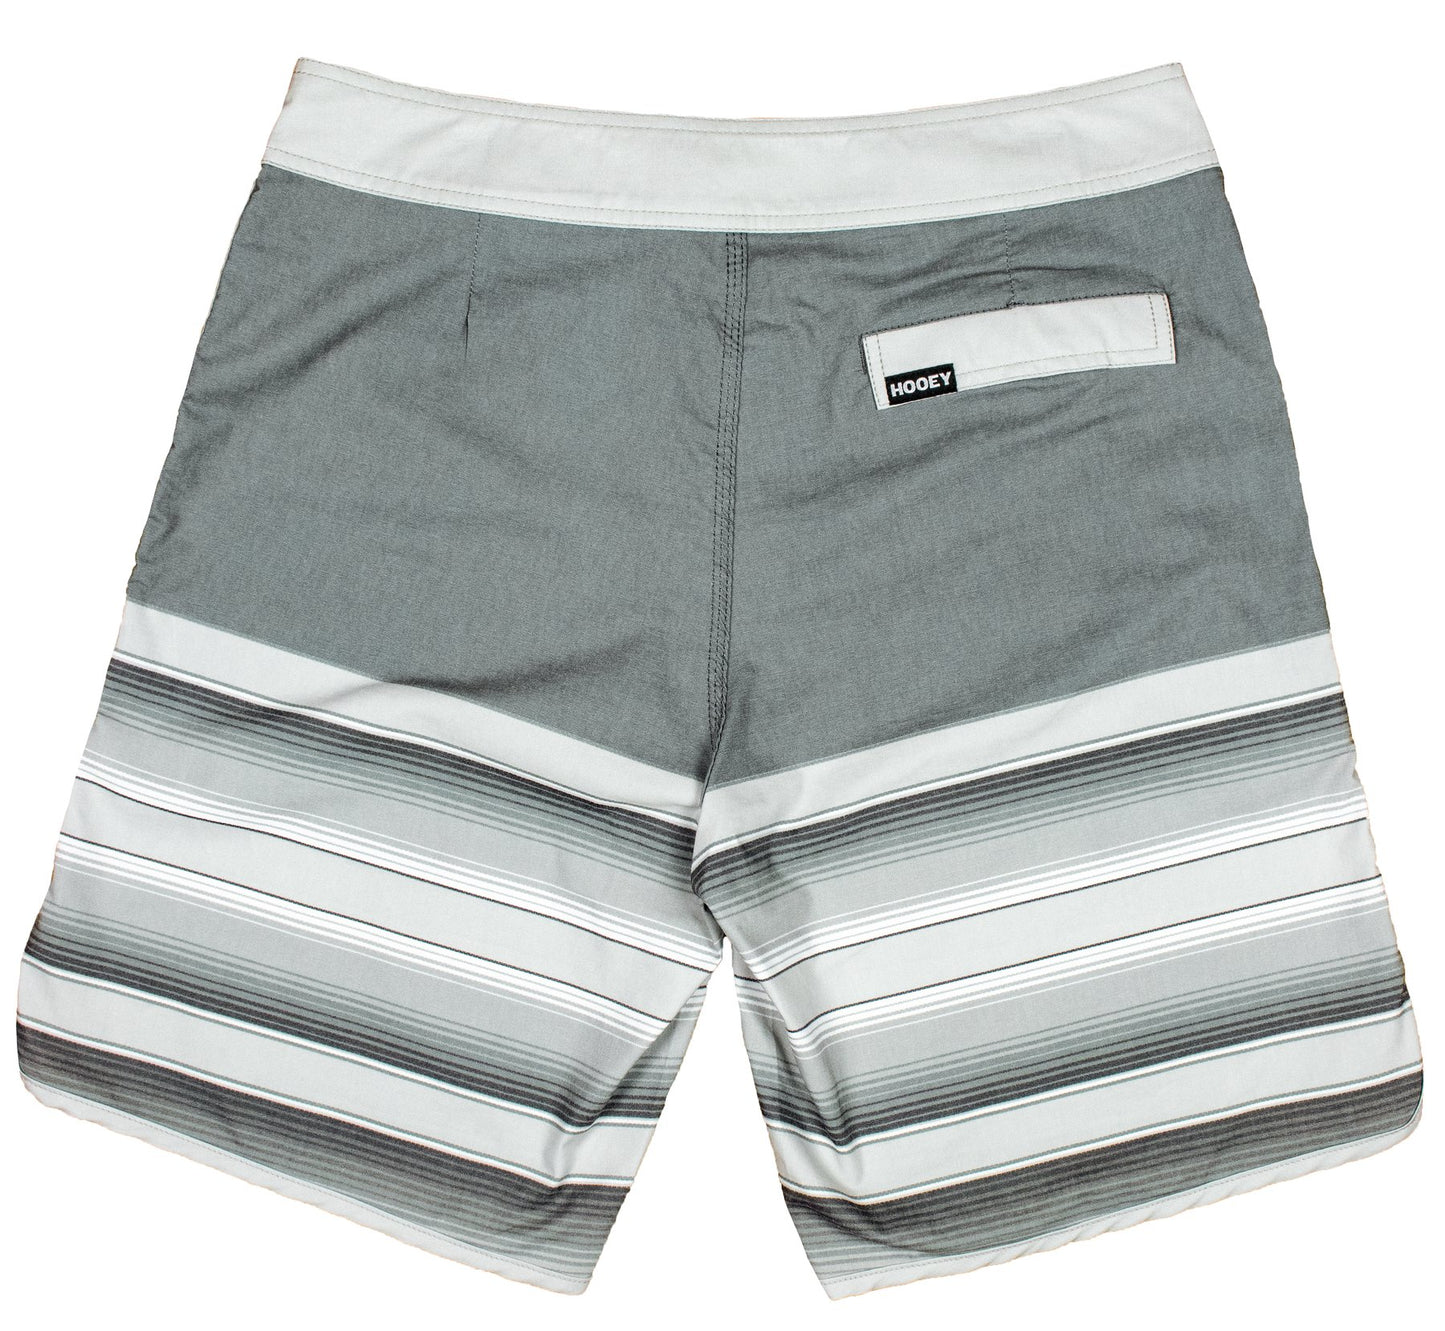 HOOey Shaka Grey/White Board Shorts